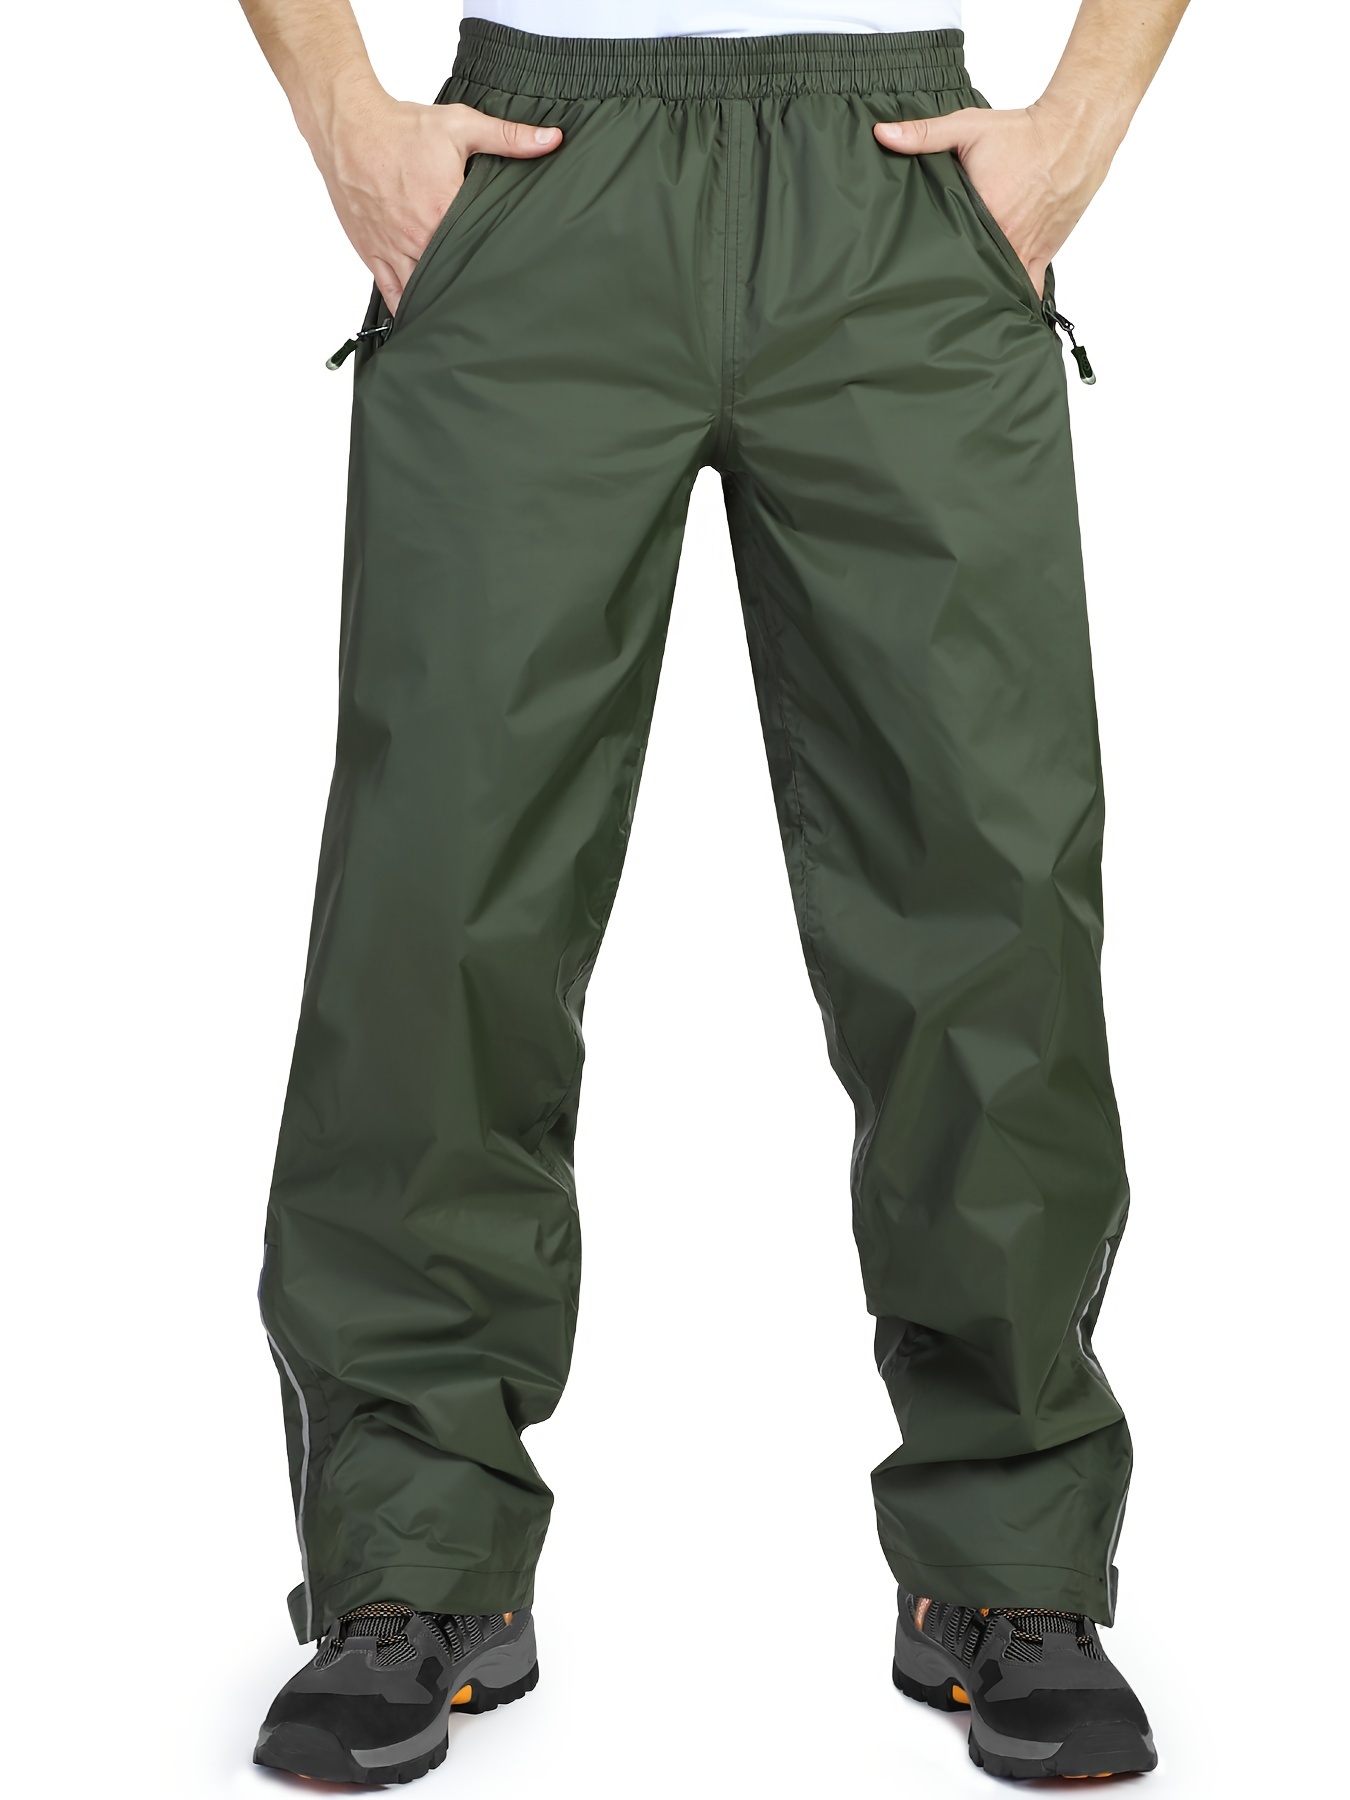 Men's Waterproof Cycling Pants With Zipper Pocket, Casual Nylon Lightweight Windproof Loose Pants For Outdoor Hiking Fishing Biking